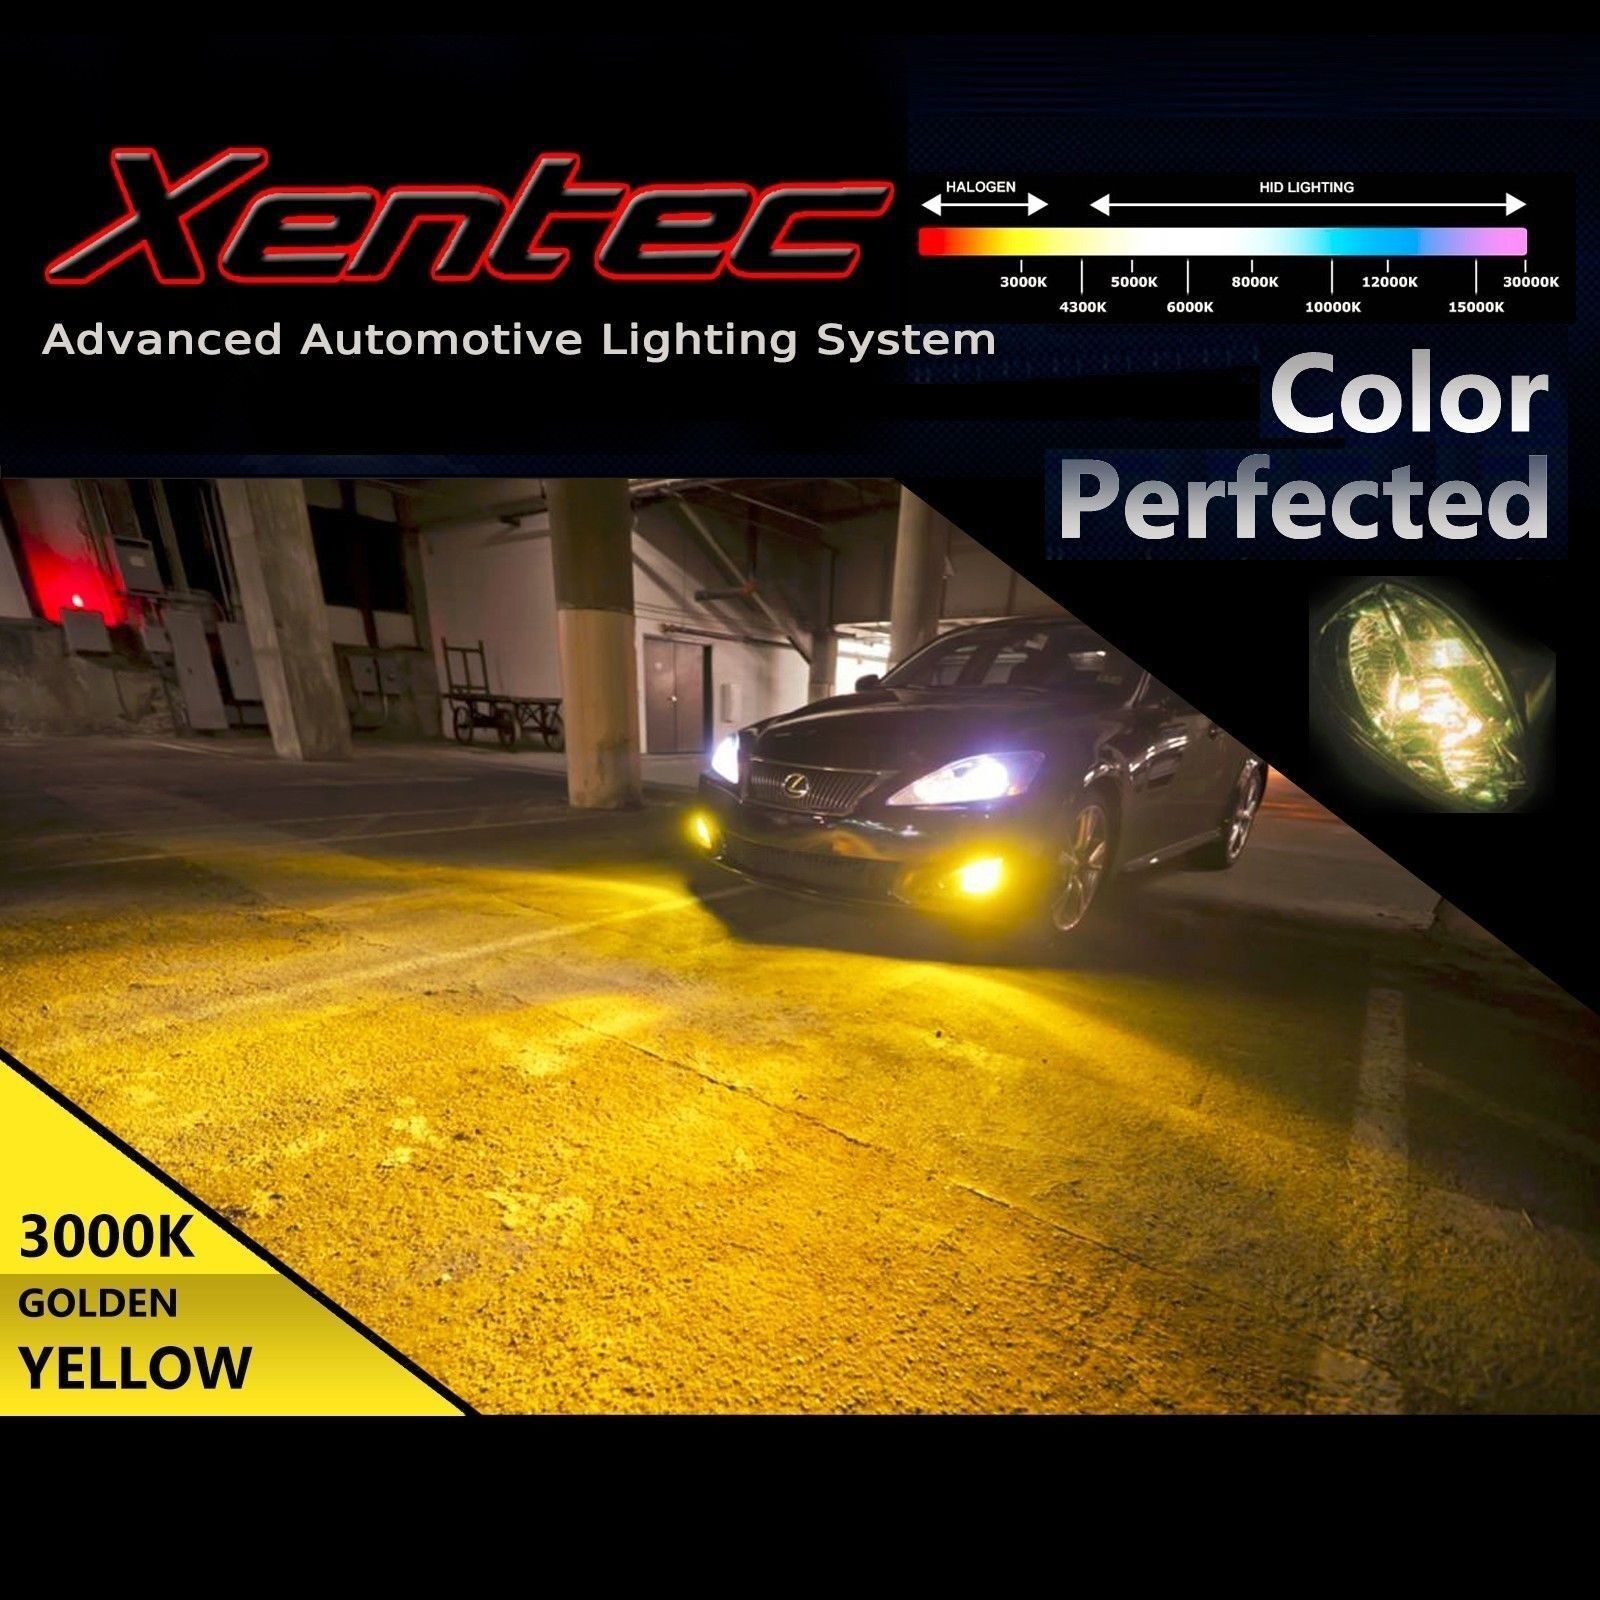 Xentec Xenon Light Slim 35W HID KIT 9006 HB4 3k 5k 6k 8k 10k 12k Headlight Fog